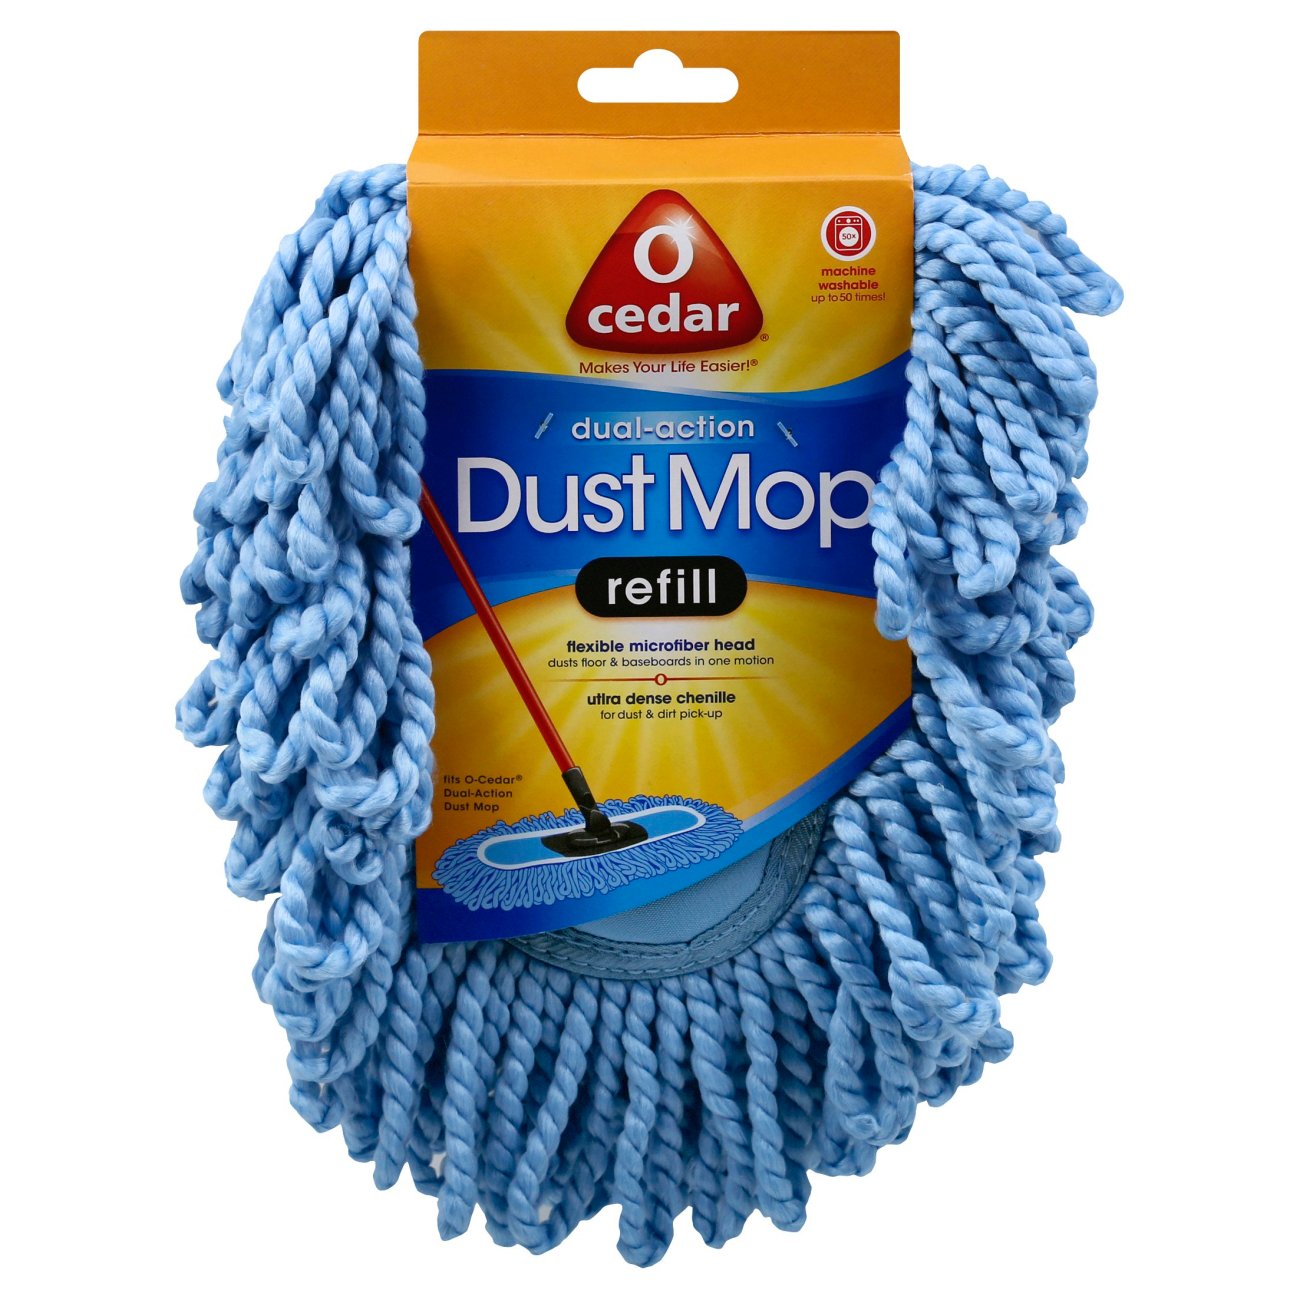 O-Cedar Dual-Action Dust Mop Refill 